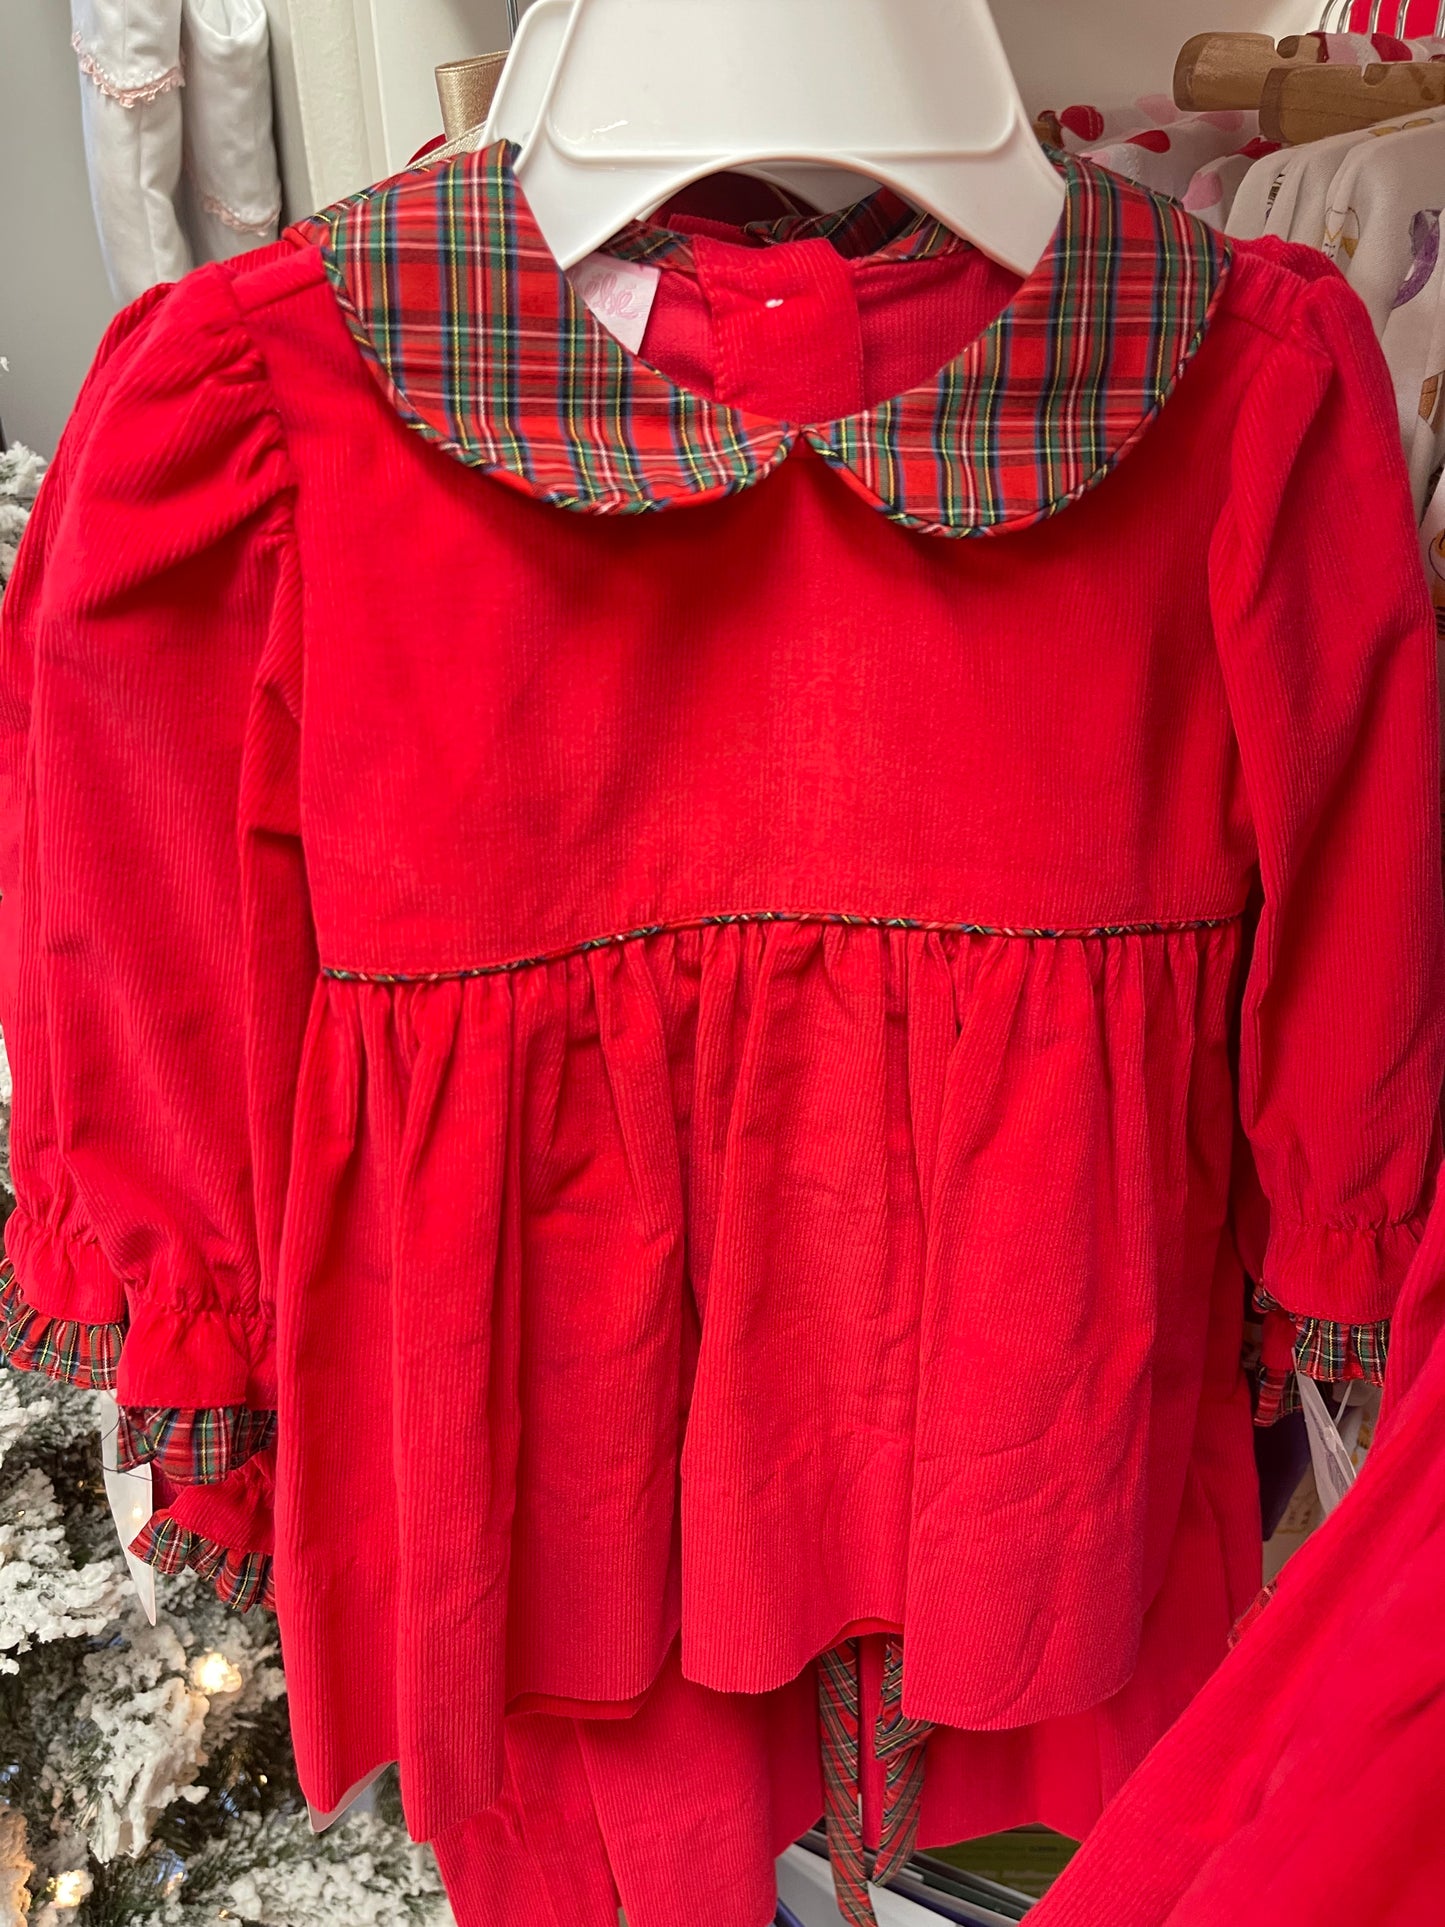 Red Corduroy Dress Trim w/ Red Plaid